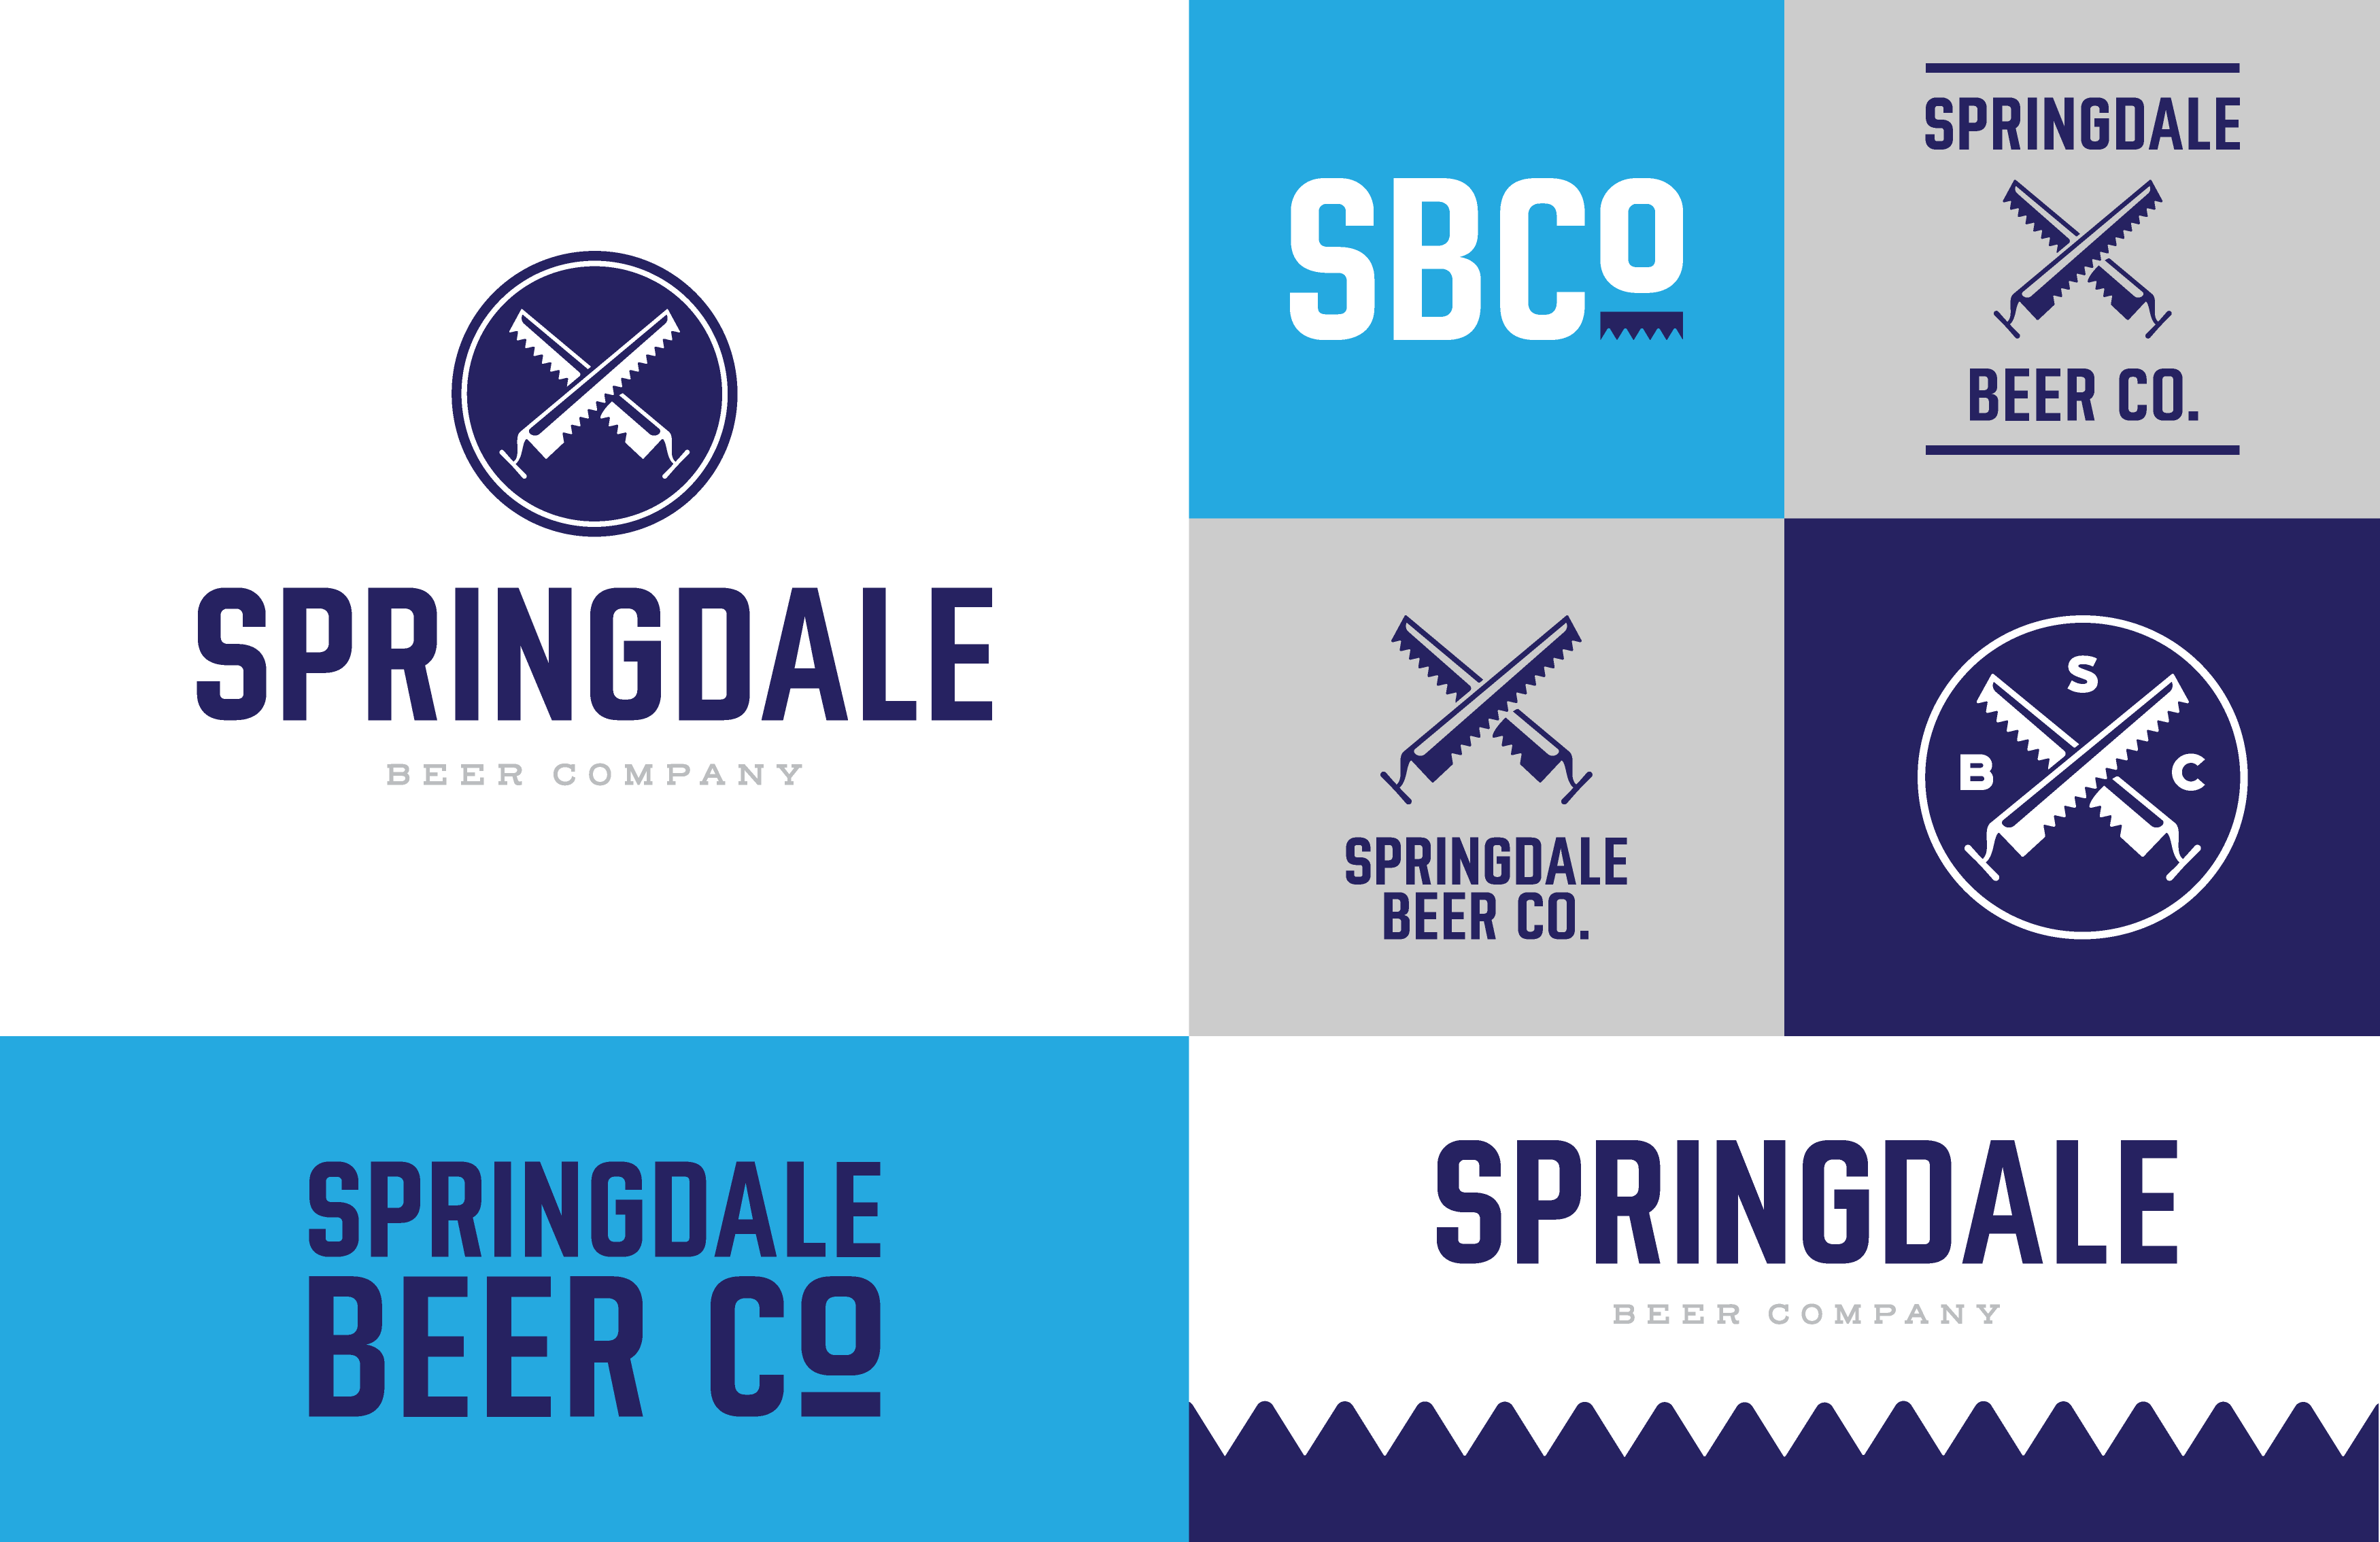 springdale_logos